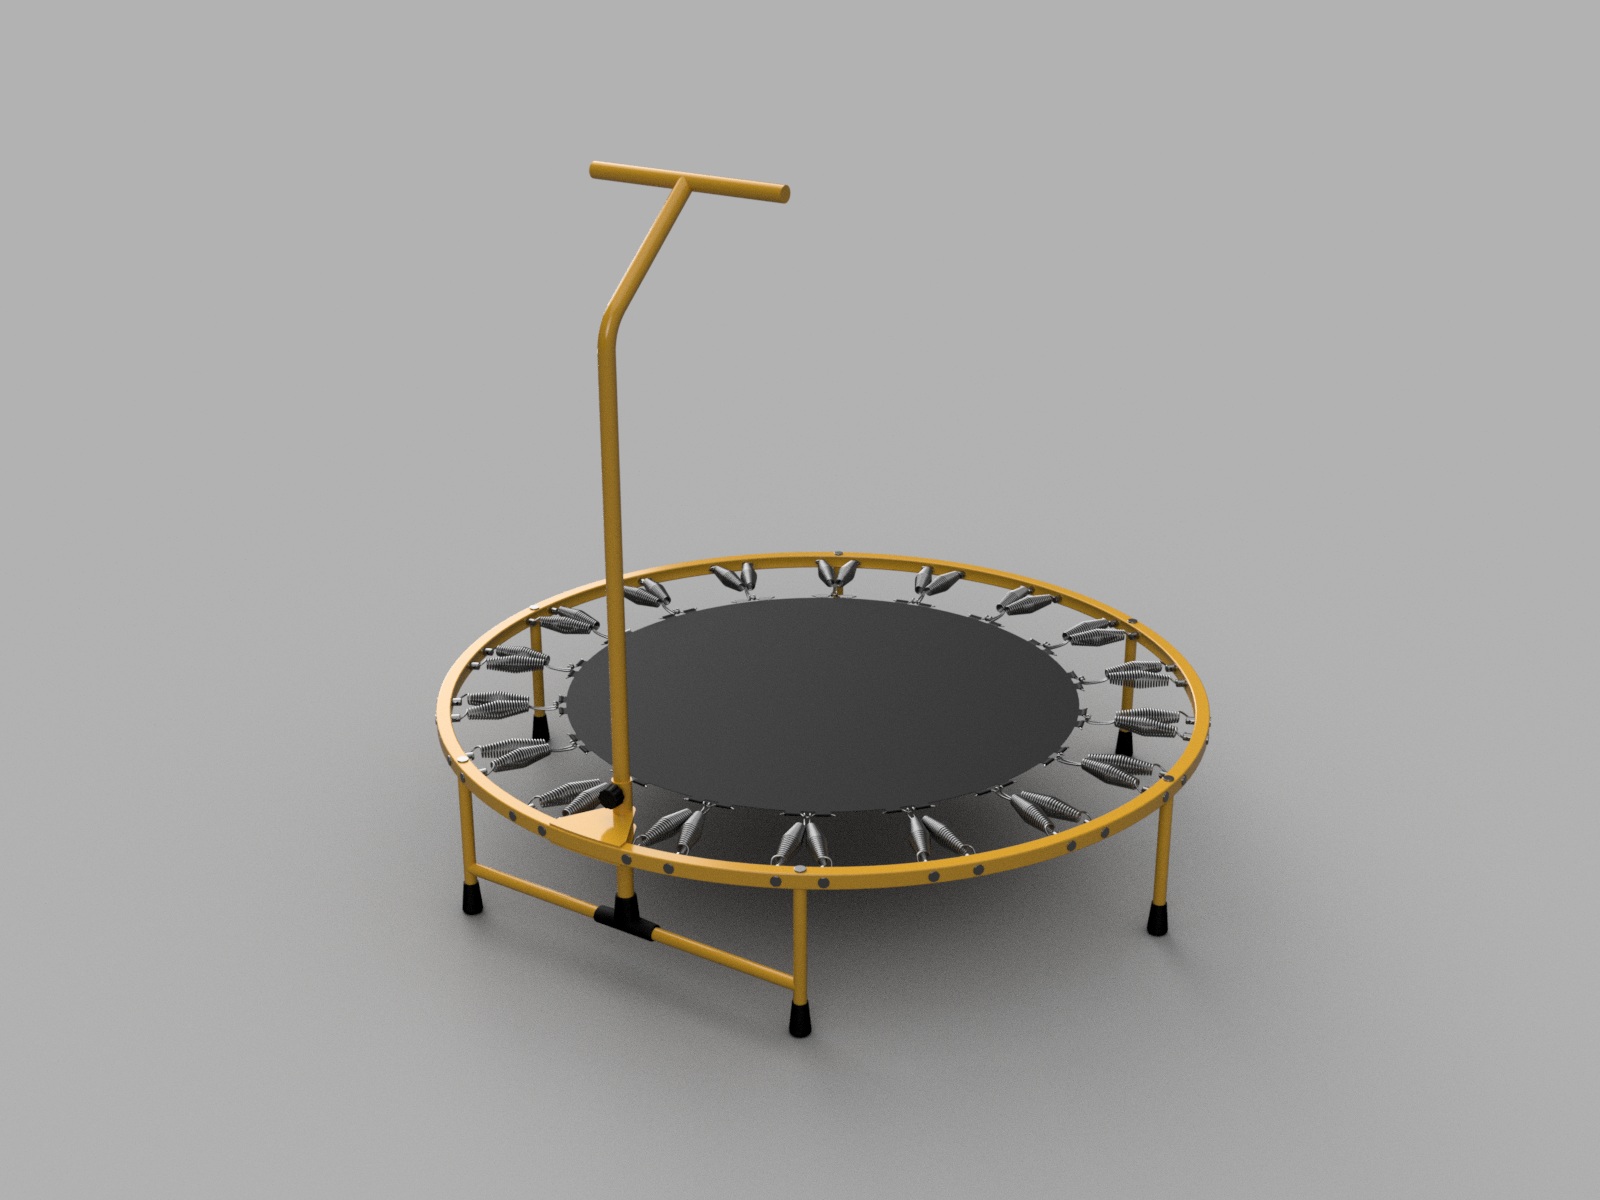 new fitness trampoline design